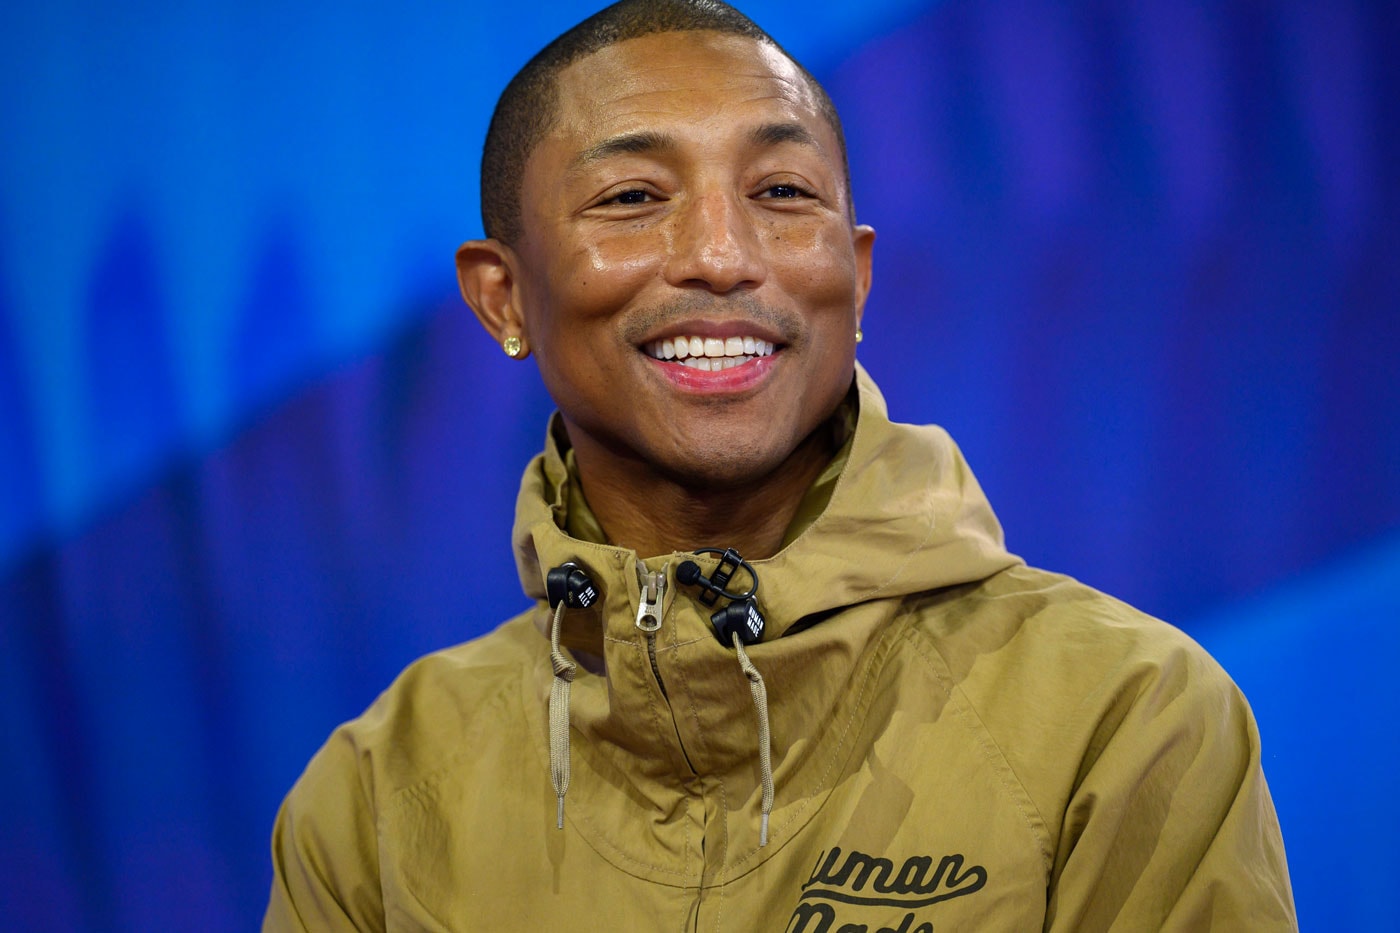 Pharrell Williams exits creative advocacy agency Mighty Dream